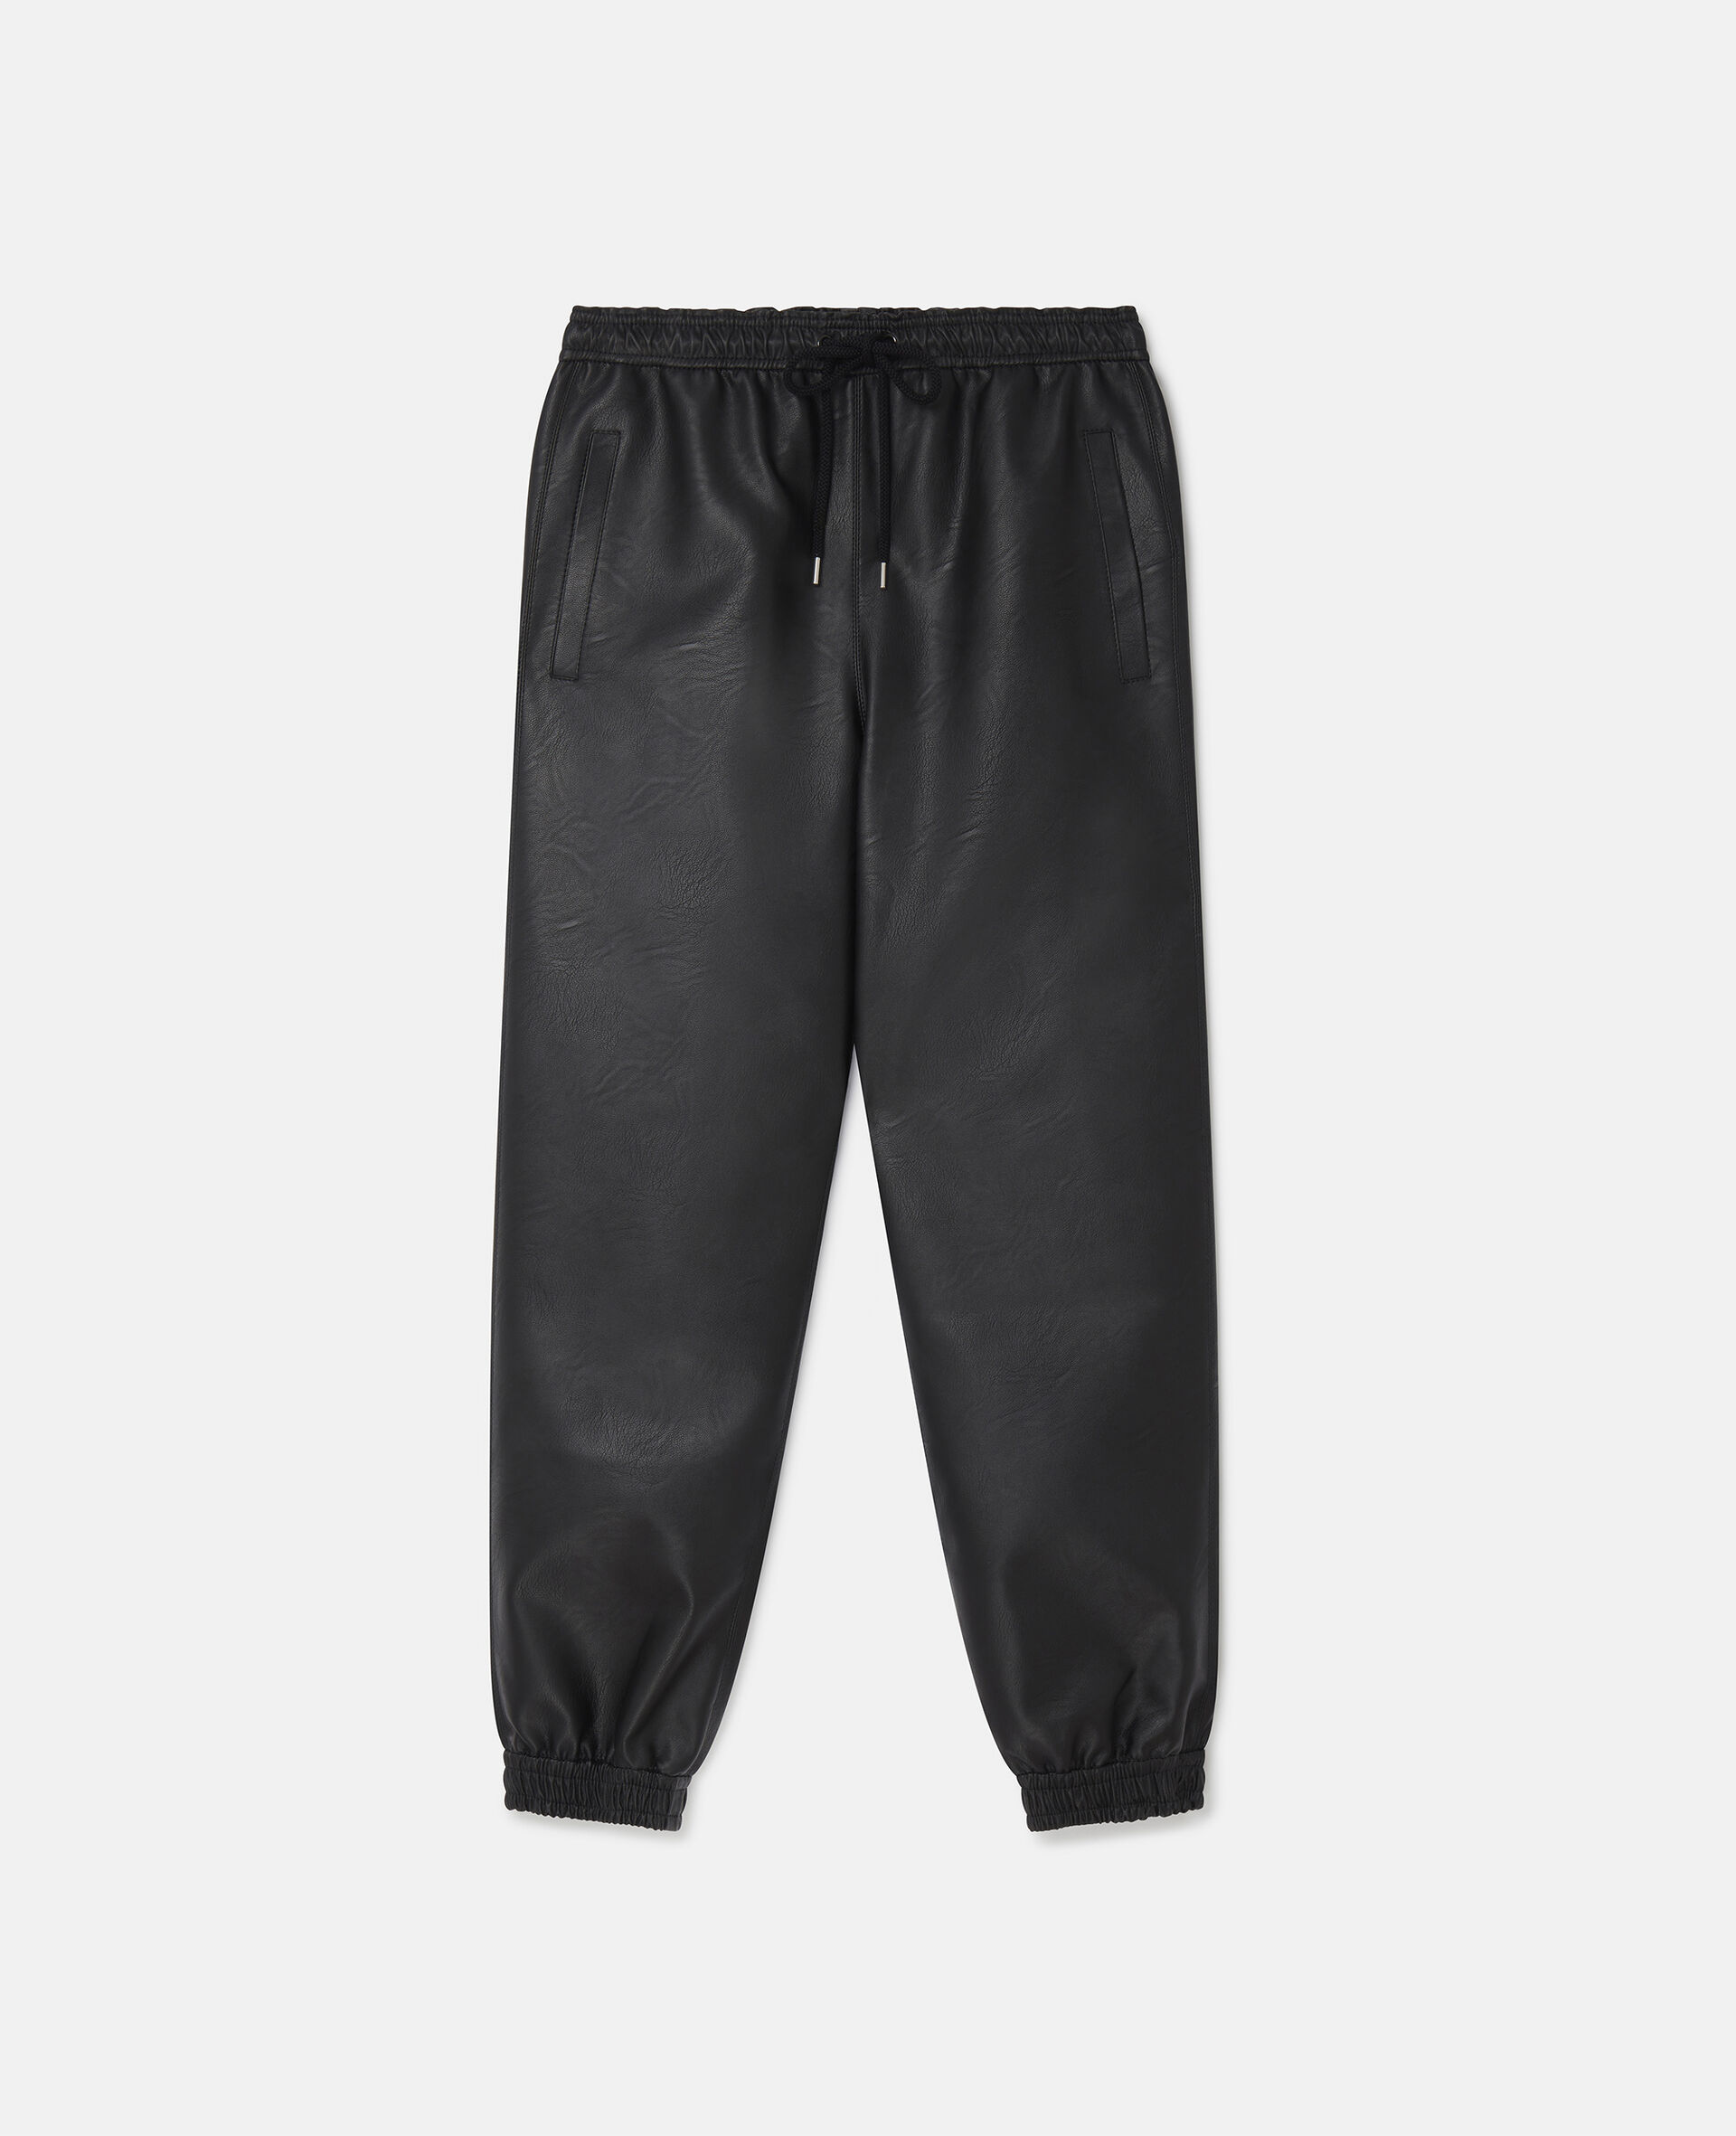 Alter Mat Trousers-Black-large